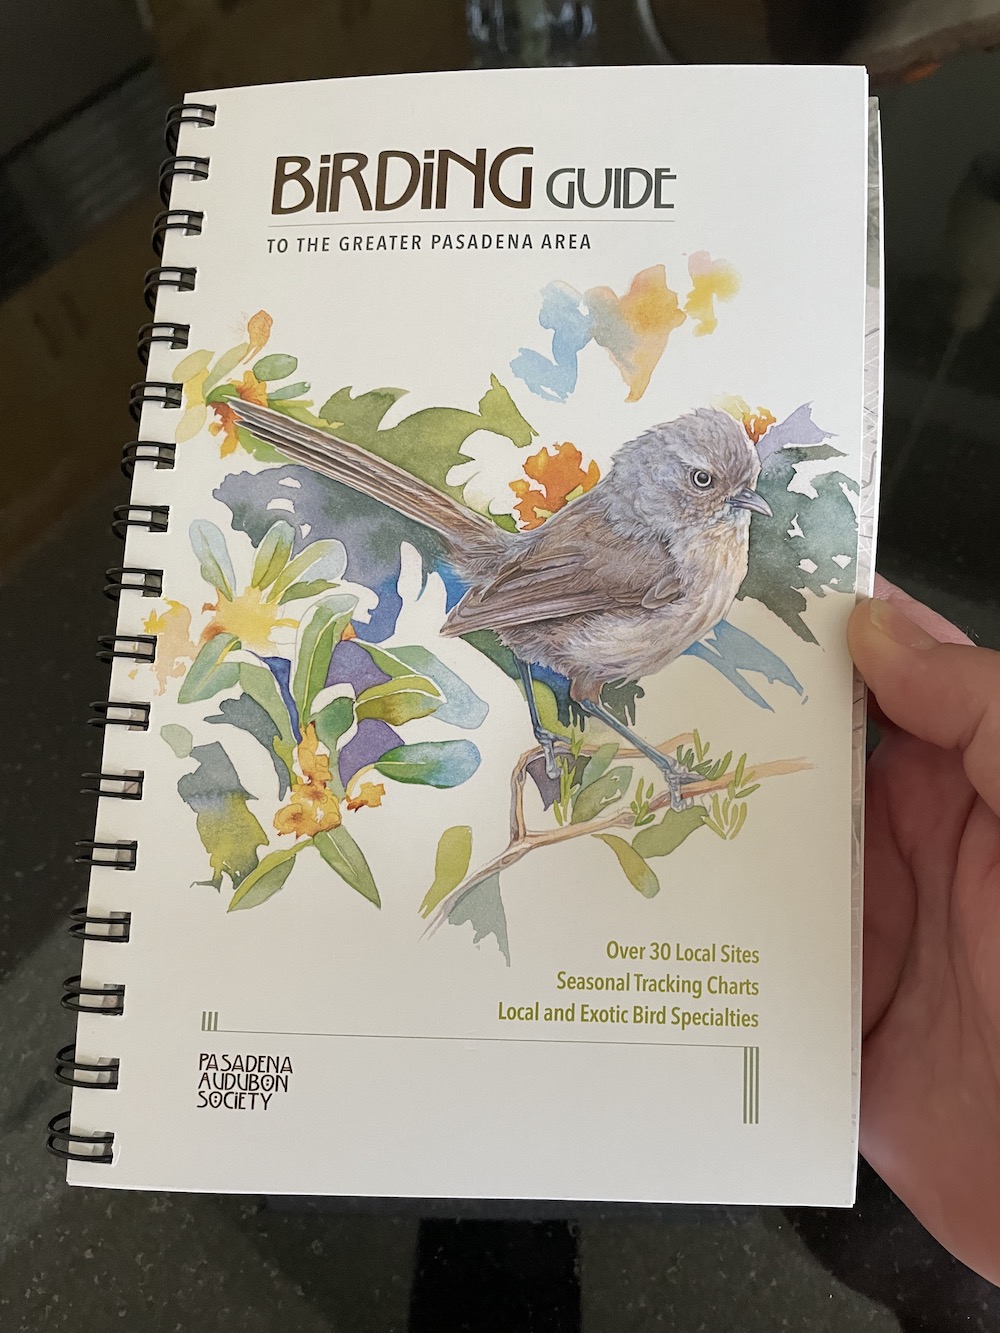 Photo of the Birding Guide